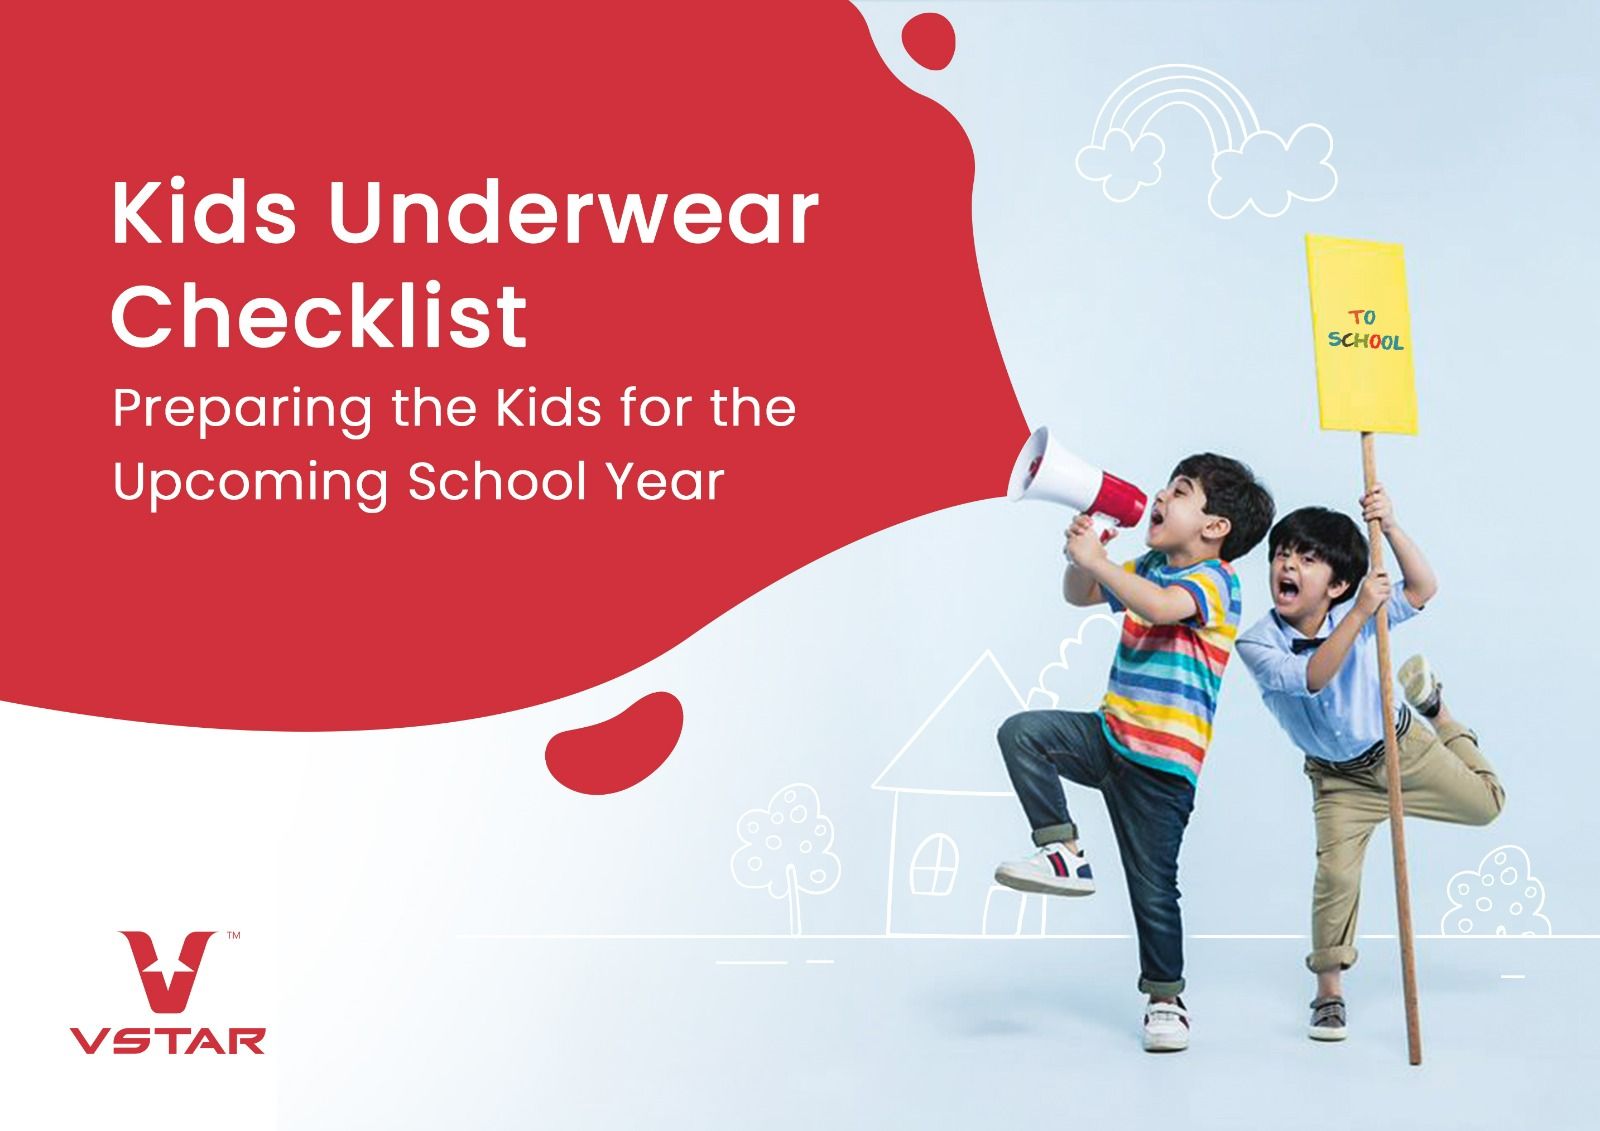 https://www.vstar.in/media//mageplaza/blog/post/k/i/kids_underwear_checklist.jpg